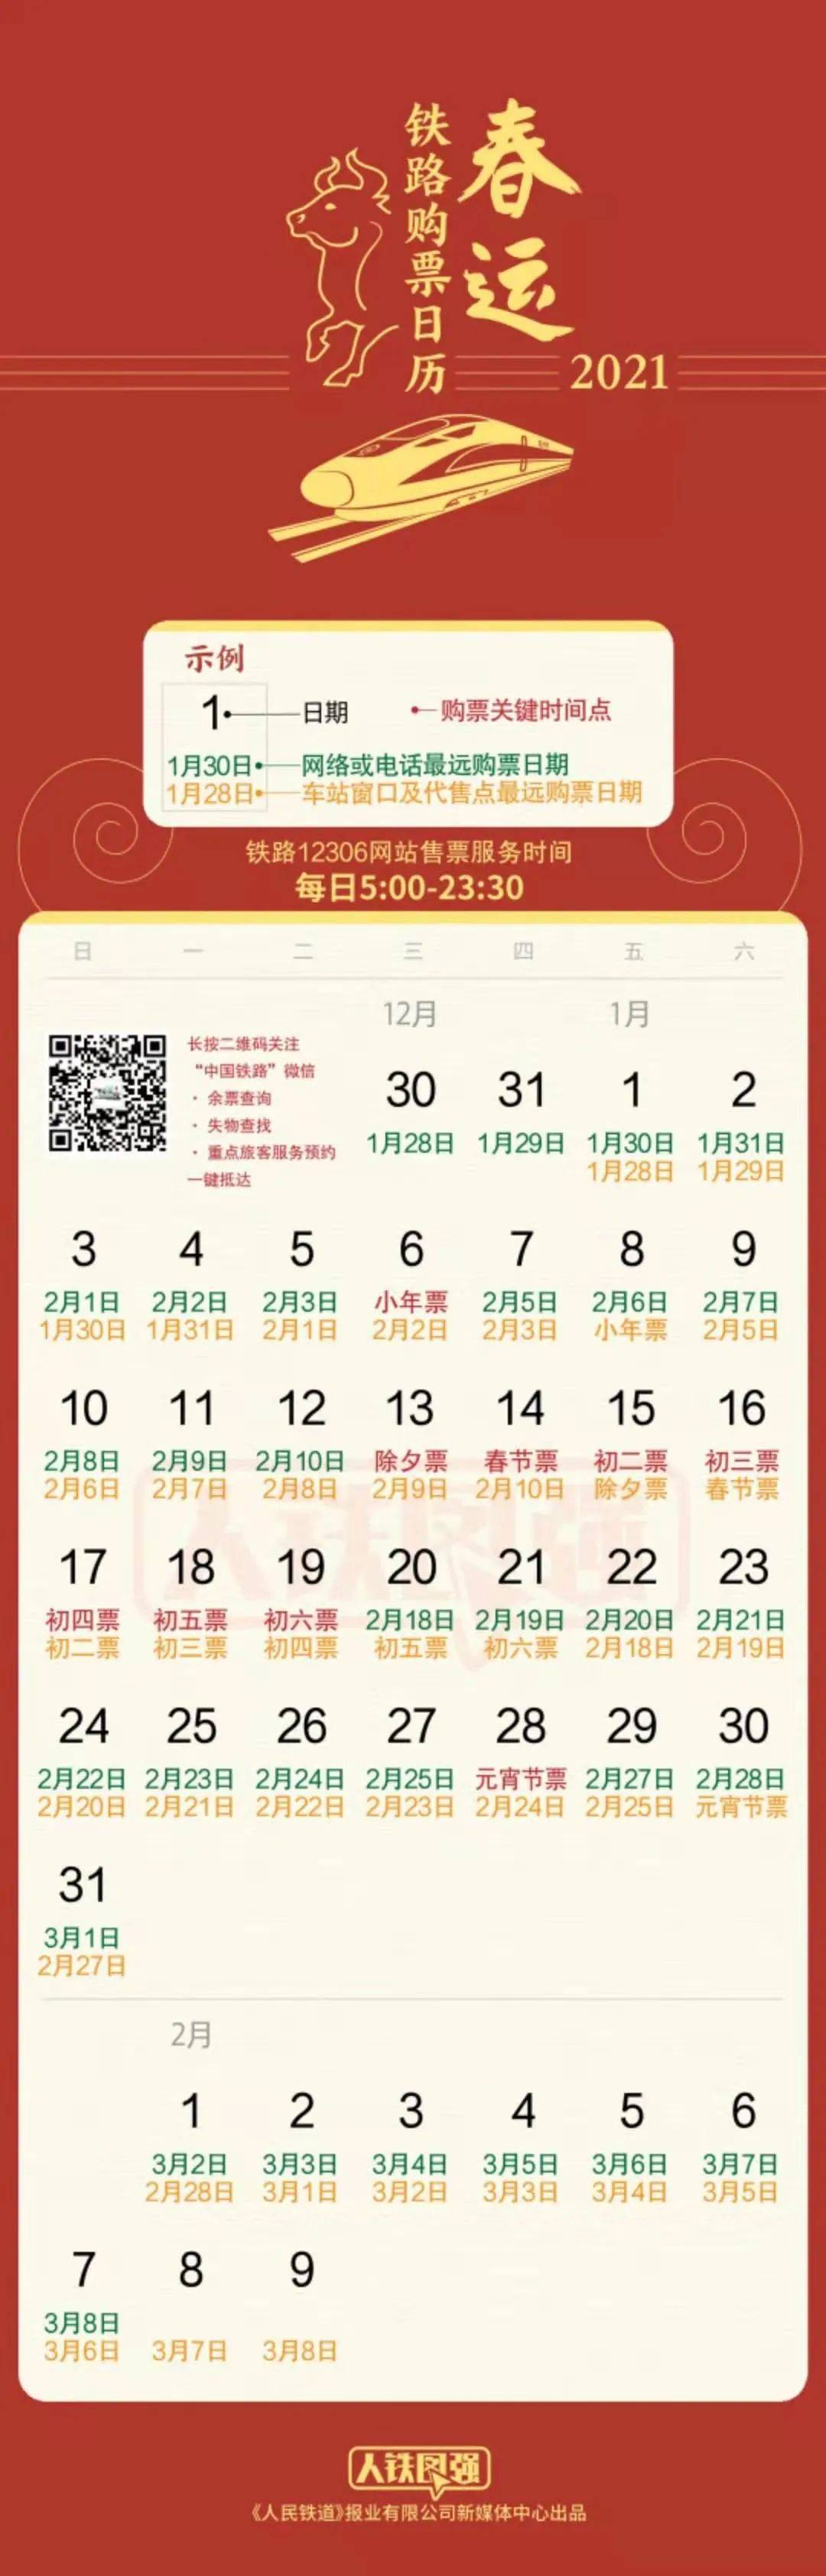 【yb体育app】
春运火车票开售 12306购票时间提前到天天早5点 ｜ 明晚